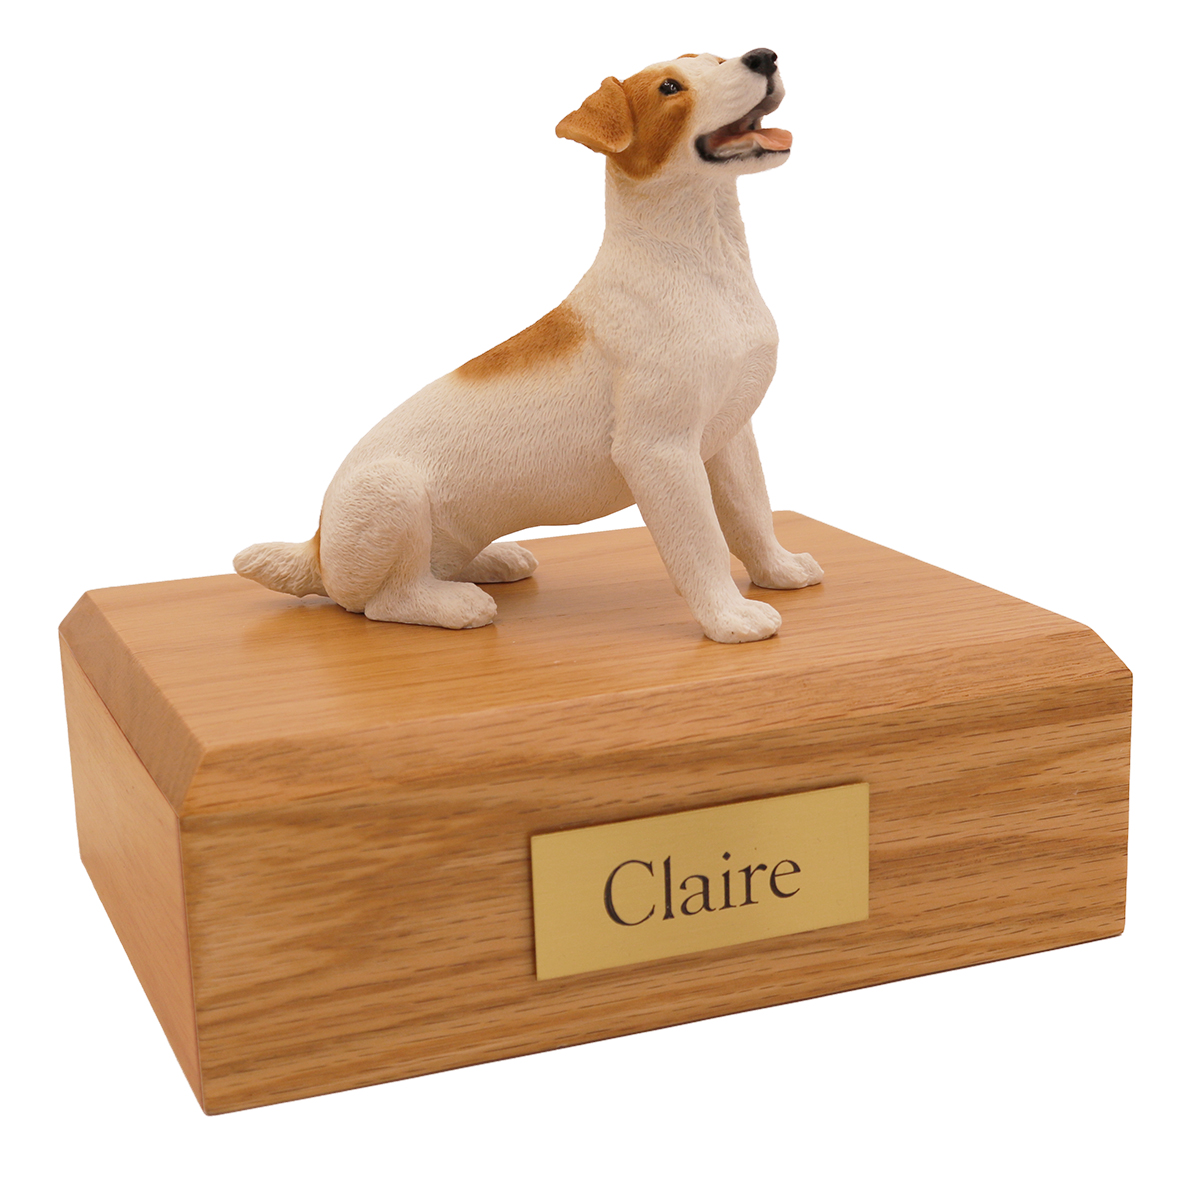 Dog, Jack Russell Terrier, Brown - Figurine Urn